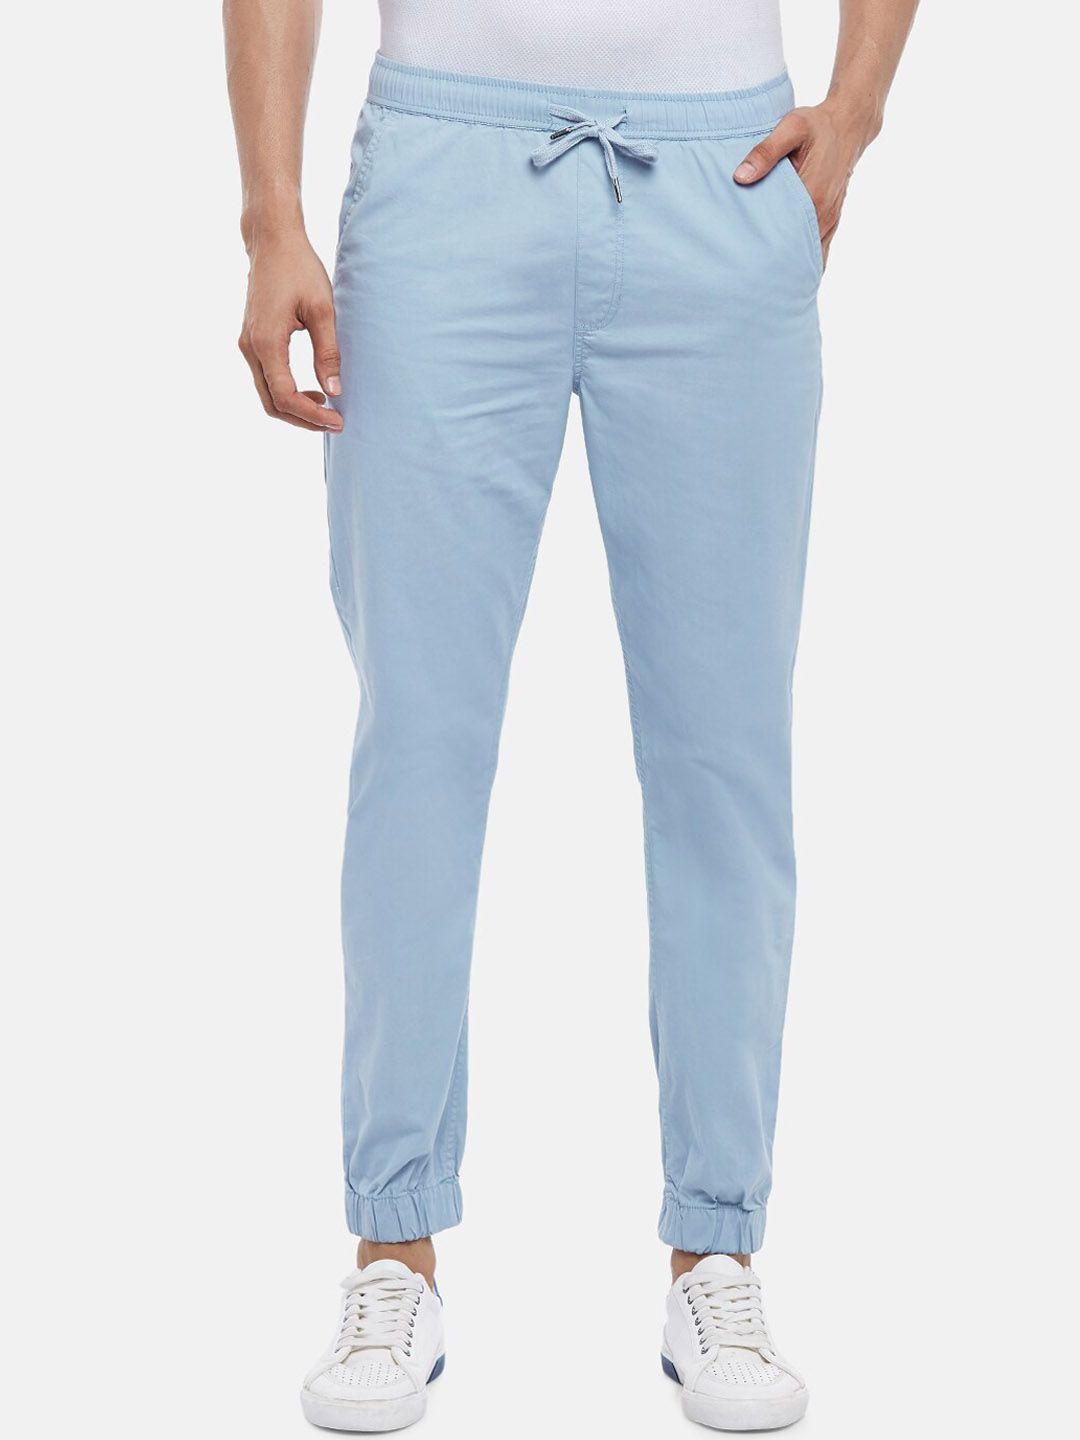 urban ranger by pantaloons men blue slim fit joggers trousers